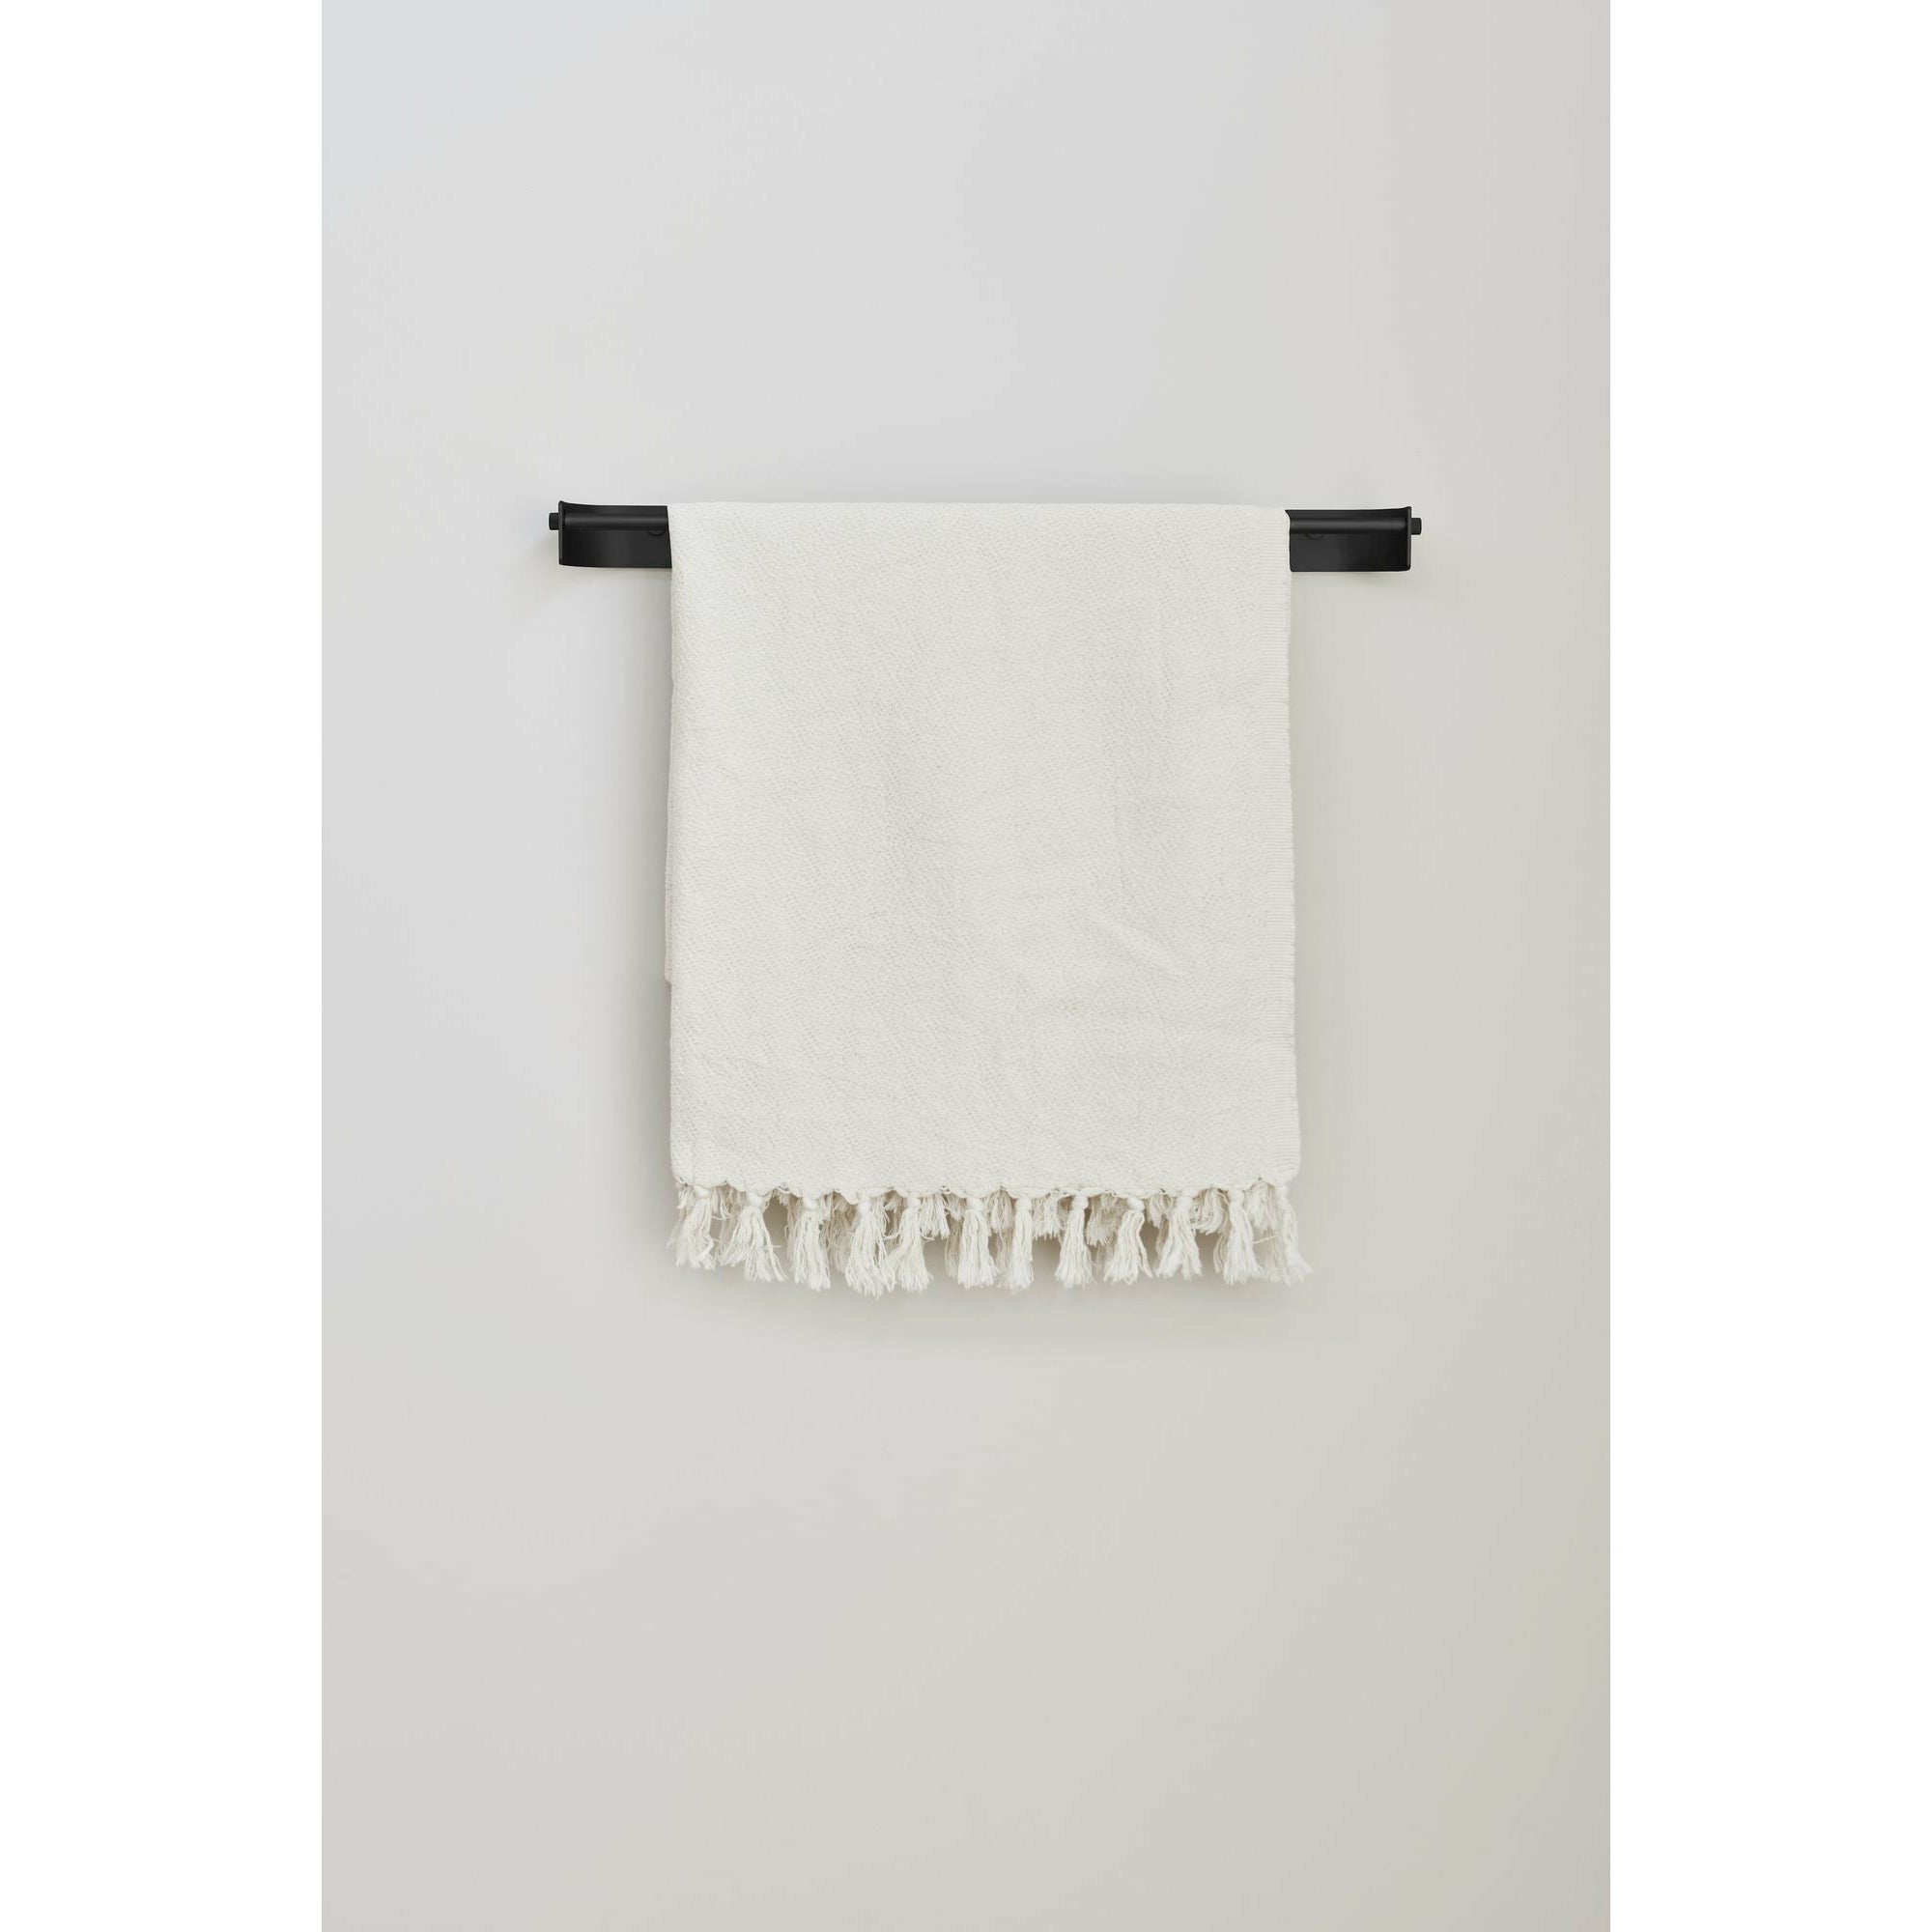 Form & Refine Arc handdoek Bar single. Zwart staal